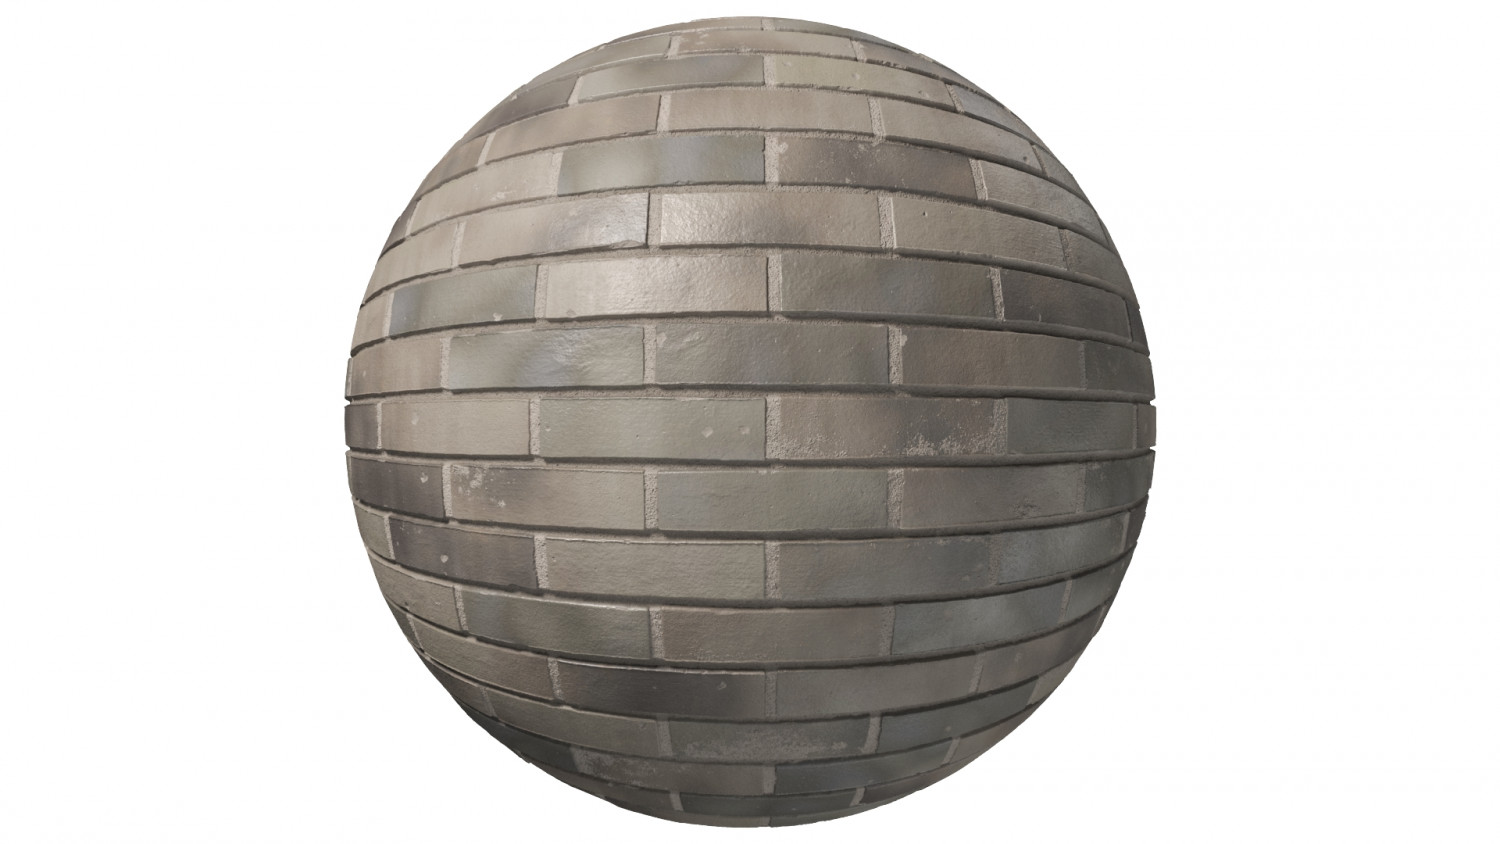 Modern grey clinker brick texture